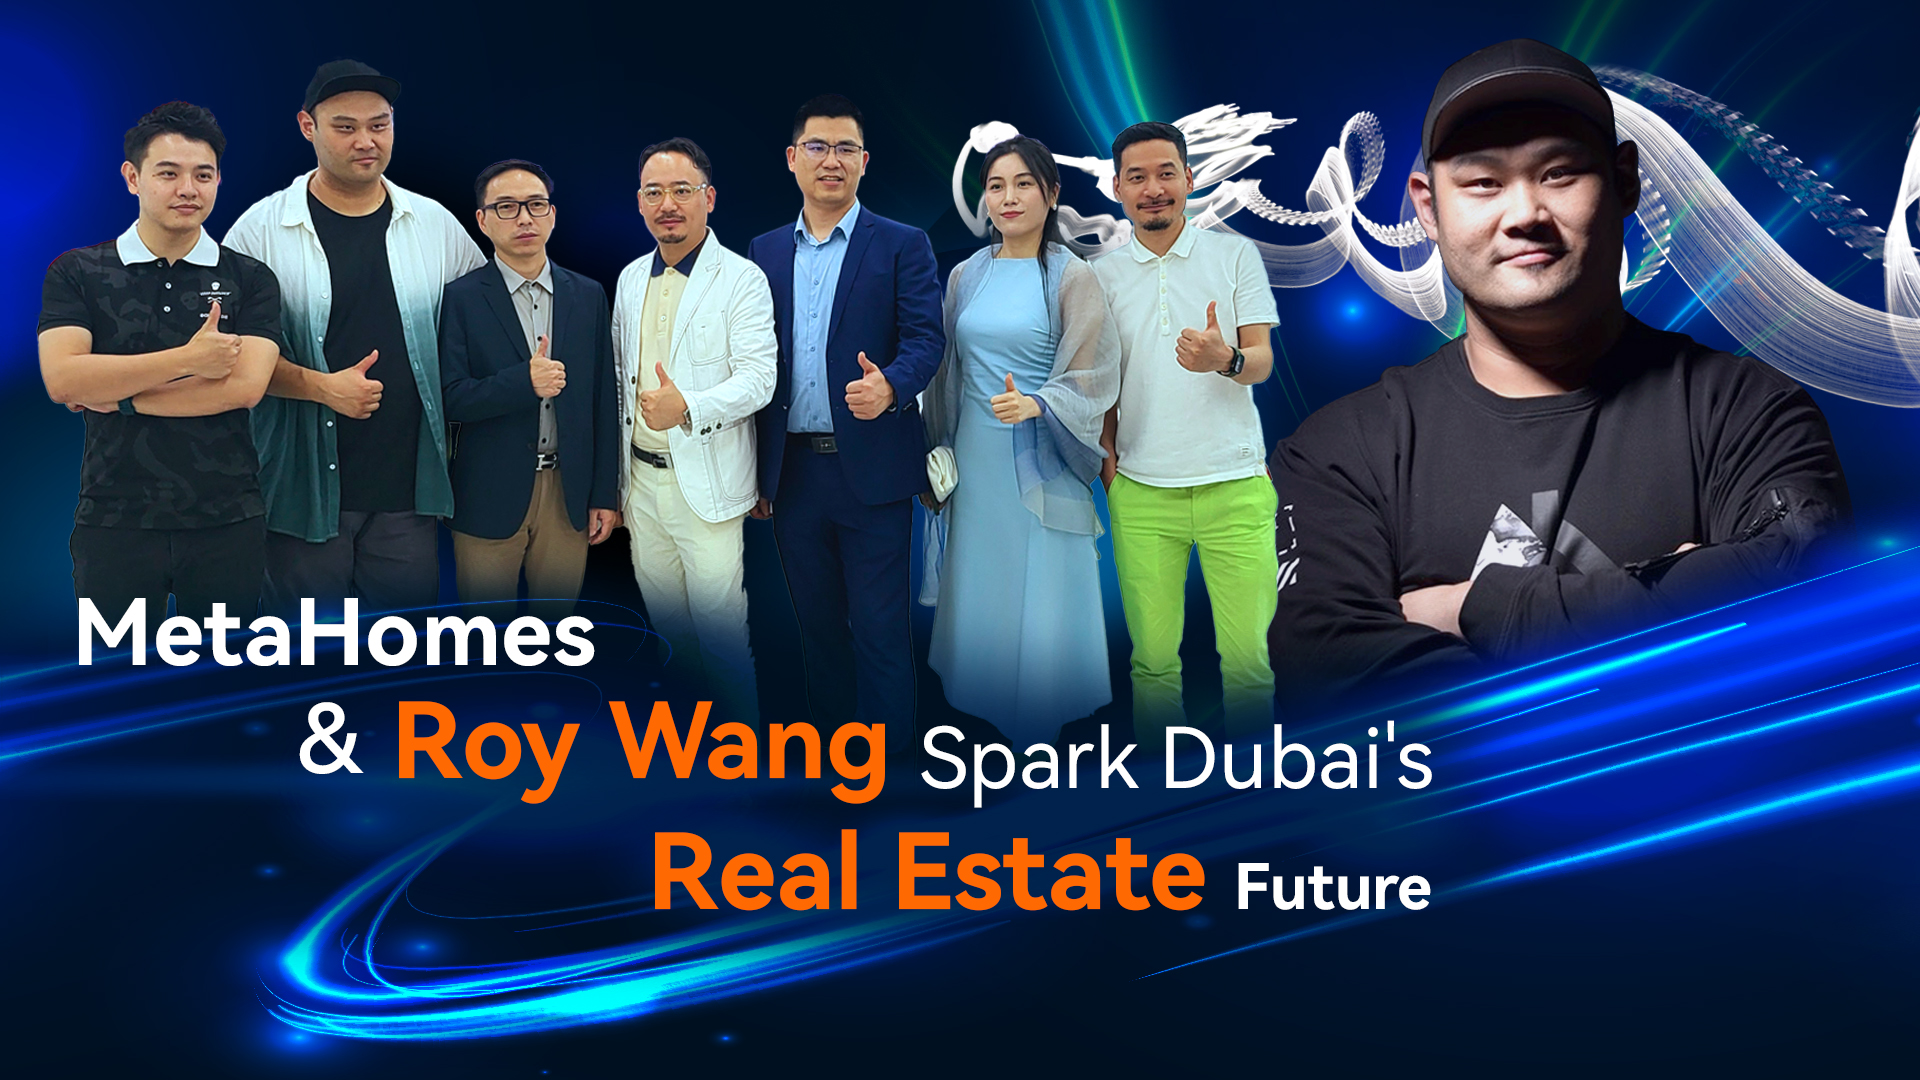 MetaHomes & Roy Wang Spark Dubai’s real estate Future